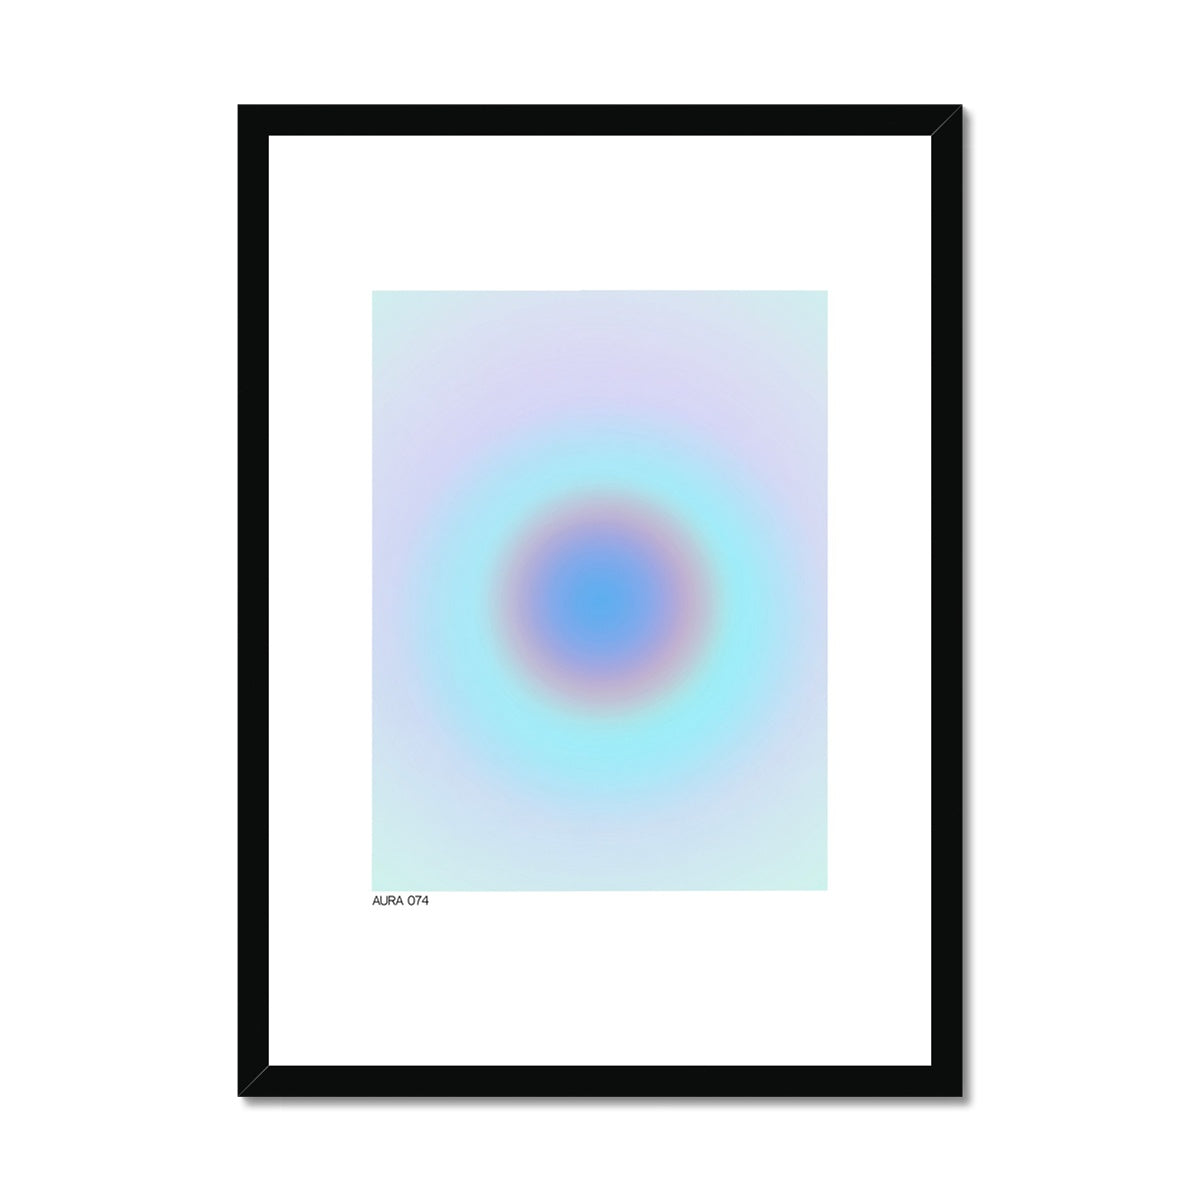 aura 074 Framed & Mounted Print